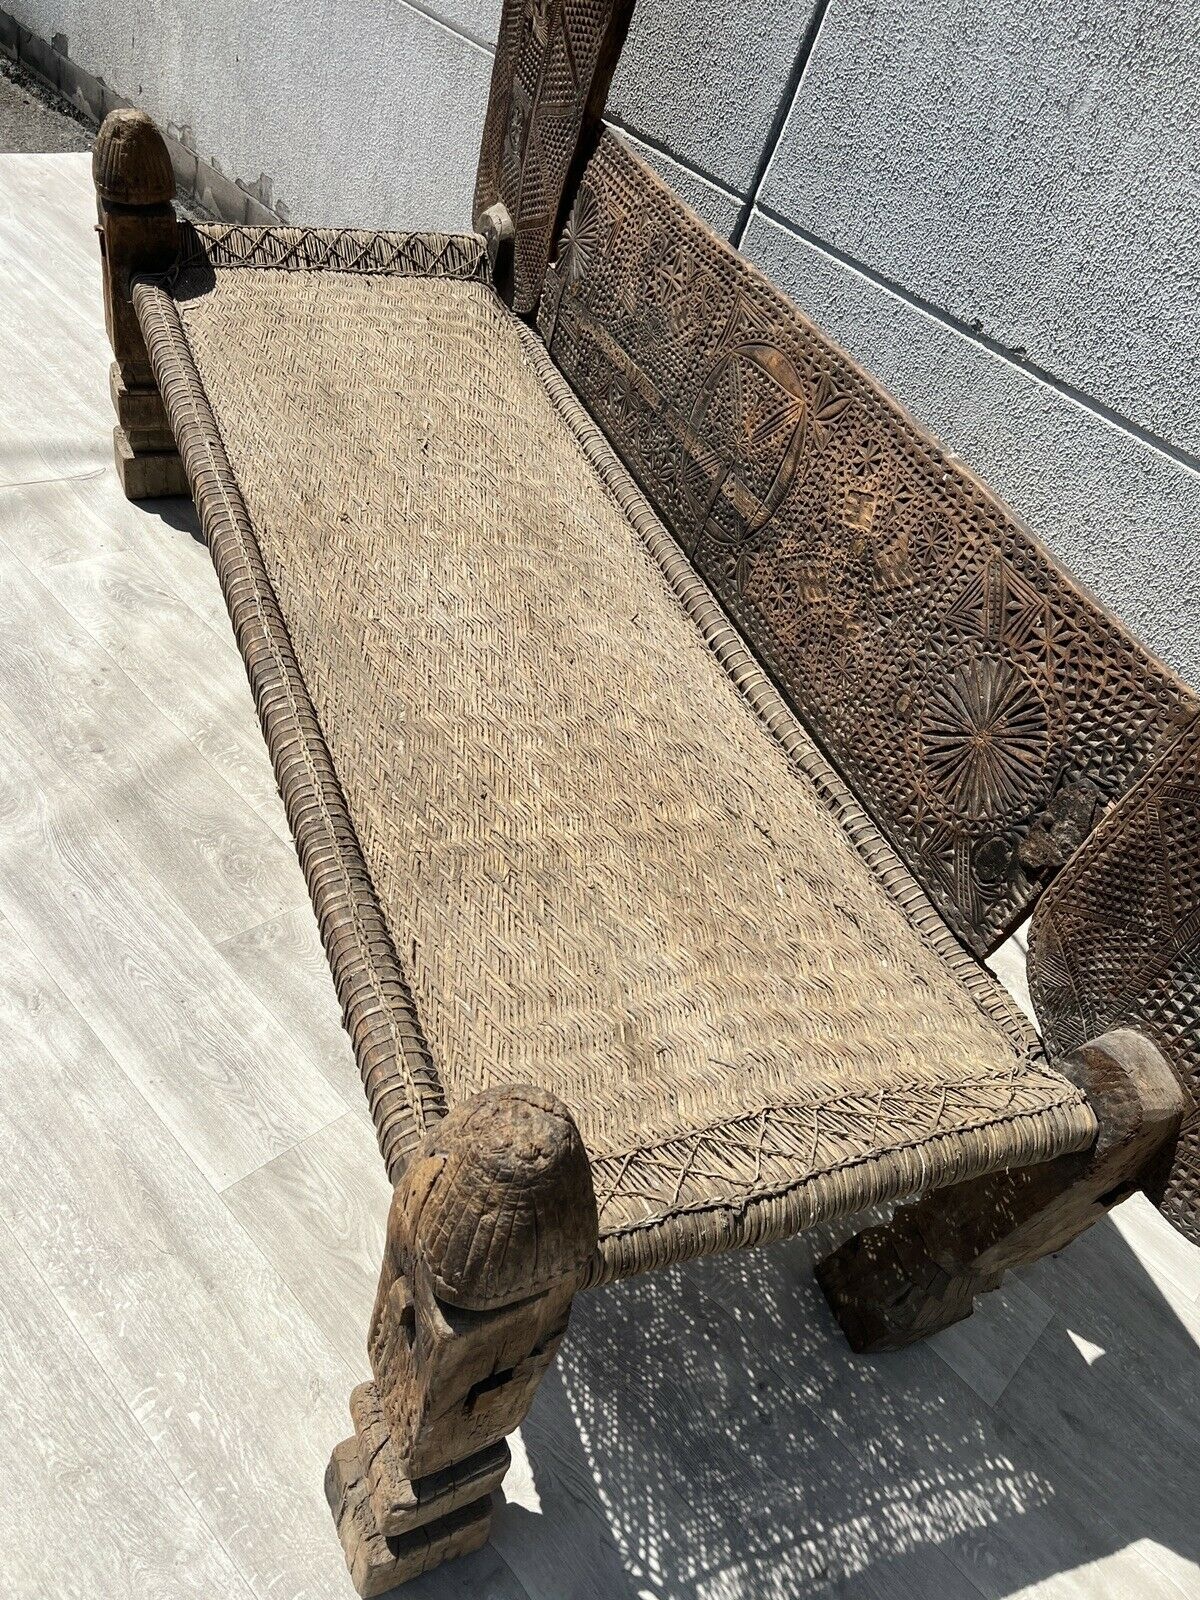 antique 19th century orient vintage cedar wood Chair bed from Nuristan Afghanistan / Swat Valley-Pakistan